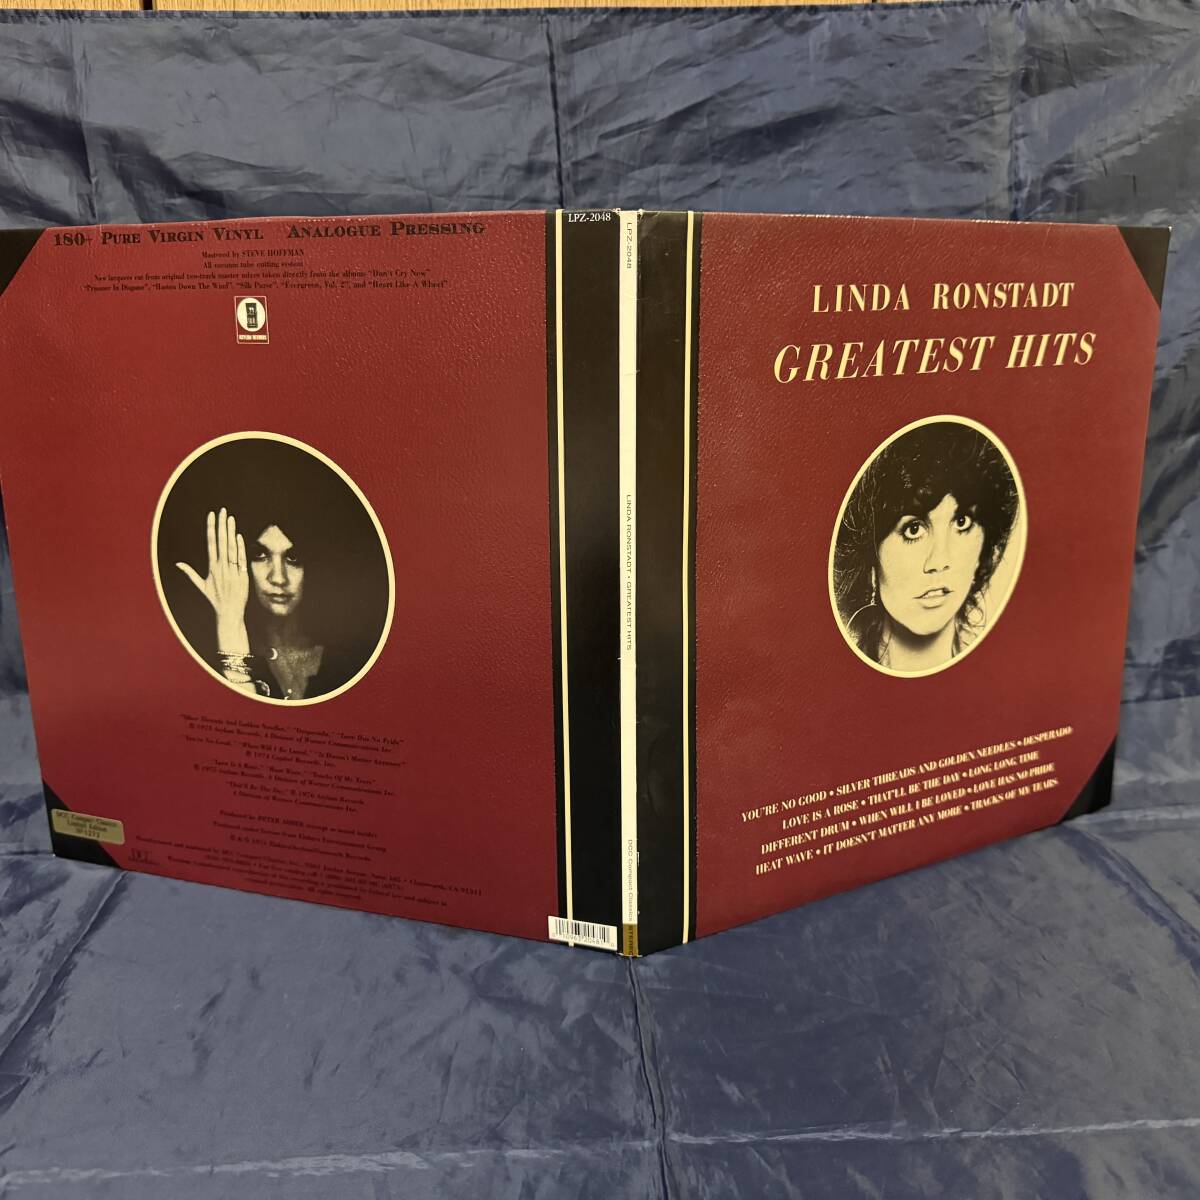 DCC Compact Classics LPZ-2048 180g 高音質重量盤 LINDA RONSTADT リンダ・ロンシュタット/Greatest Hits_画像3